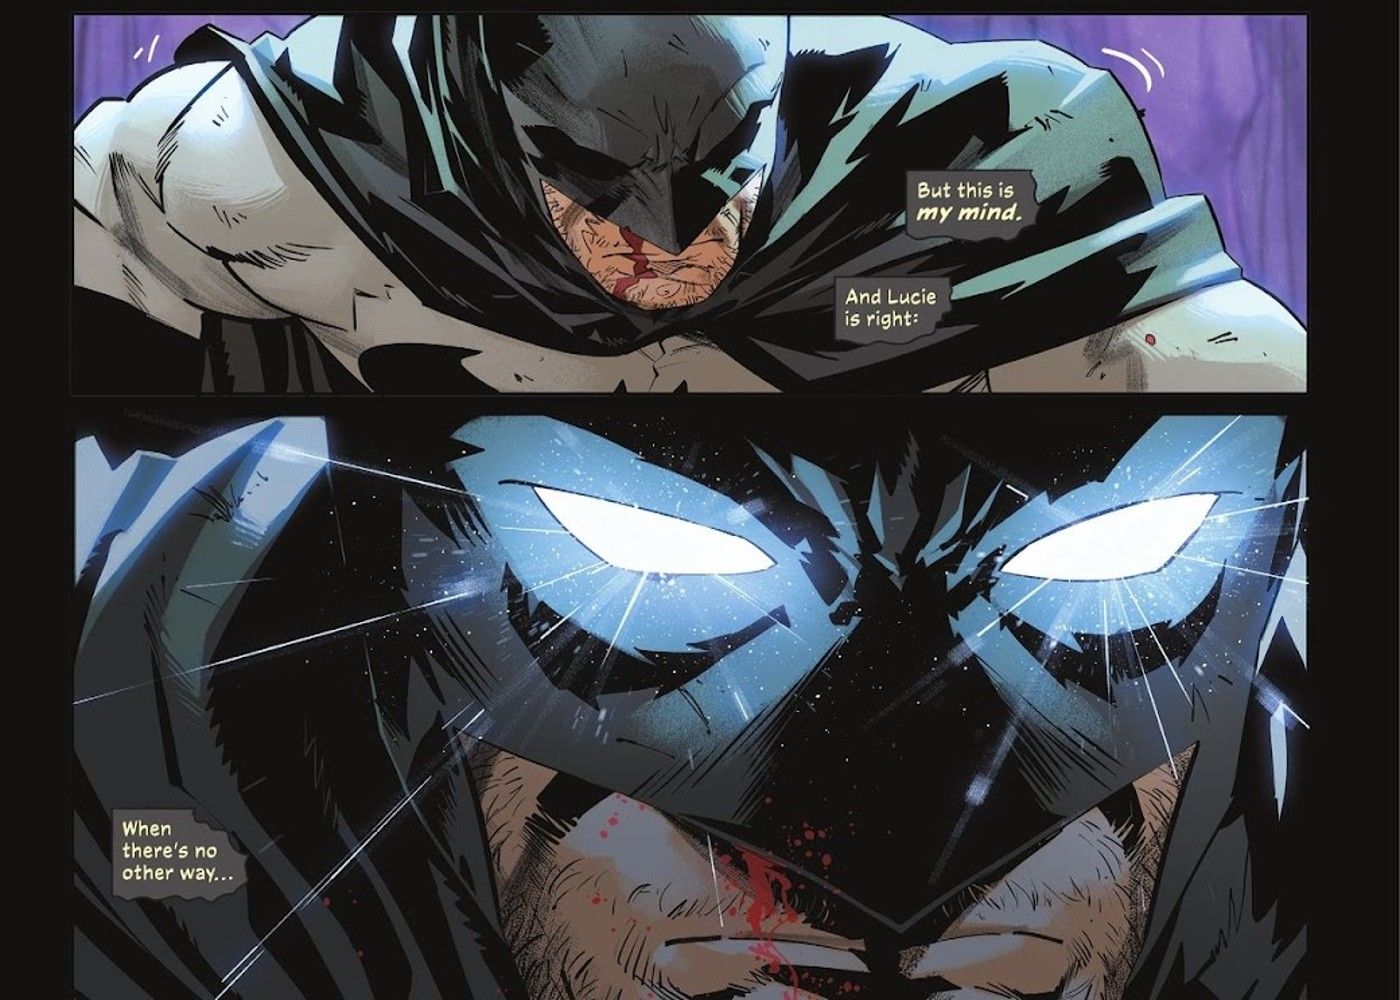 panels from Batman #140, Batman activates his memory palace